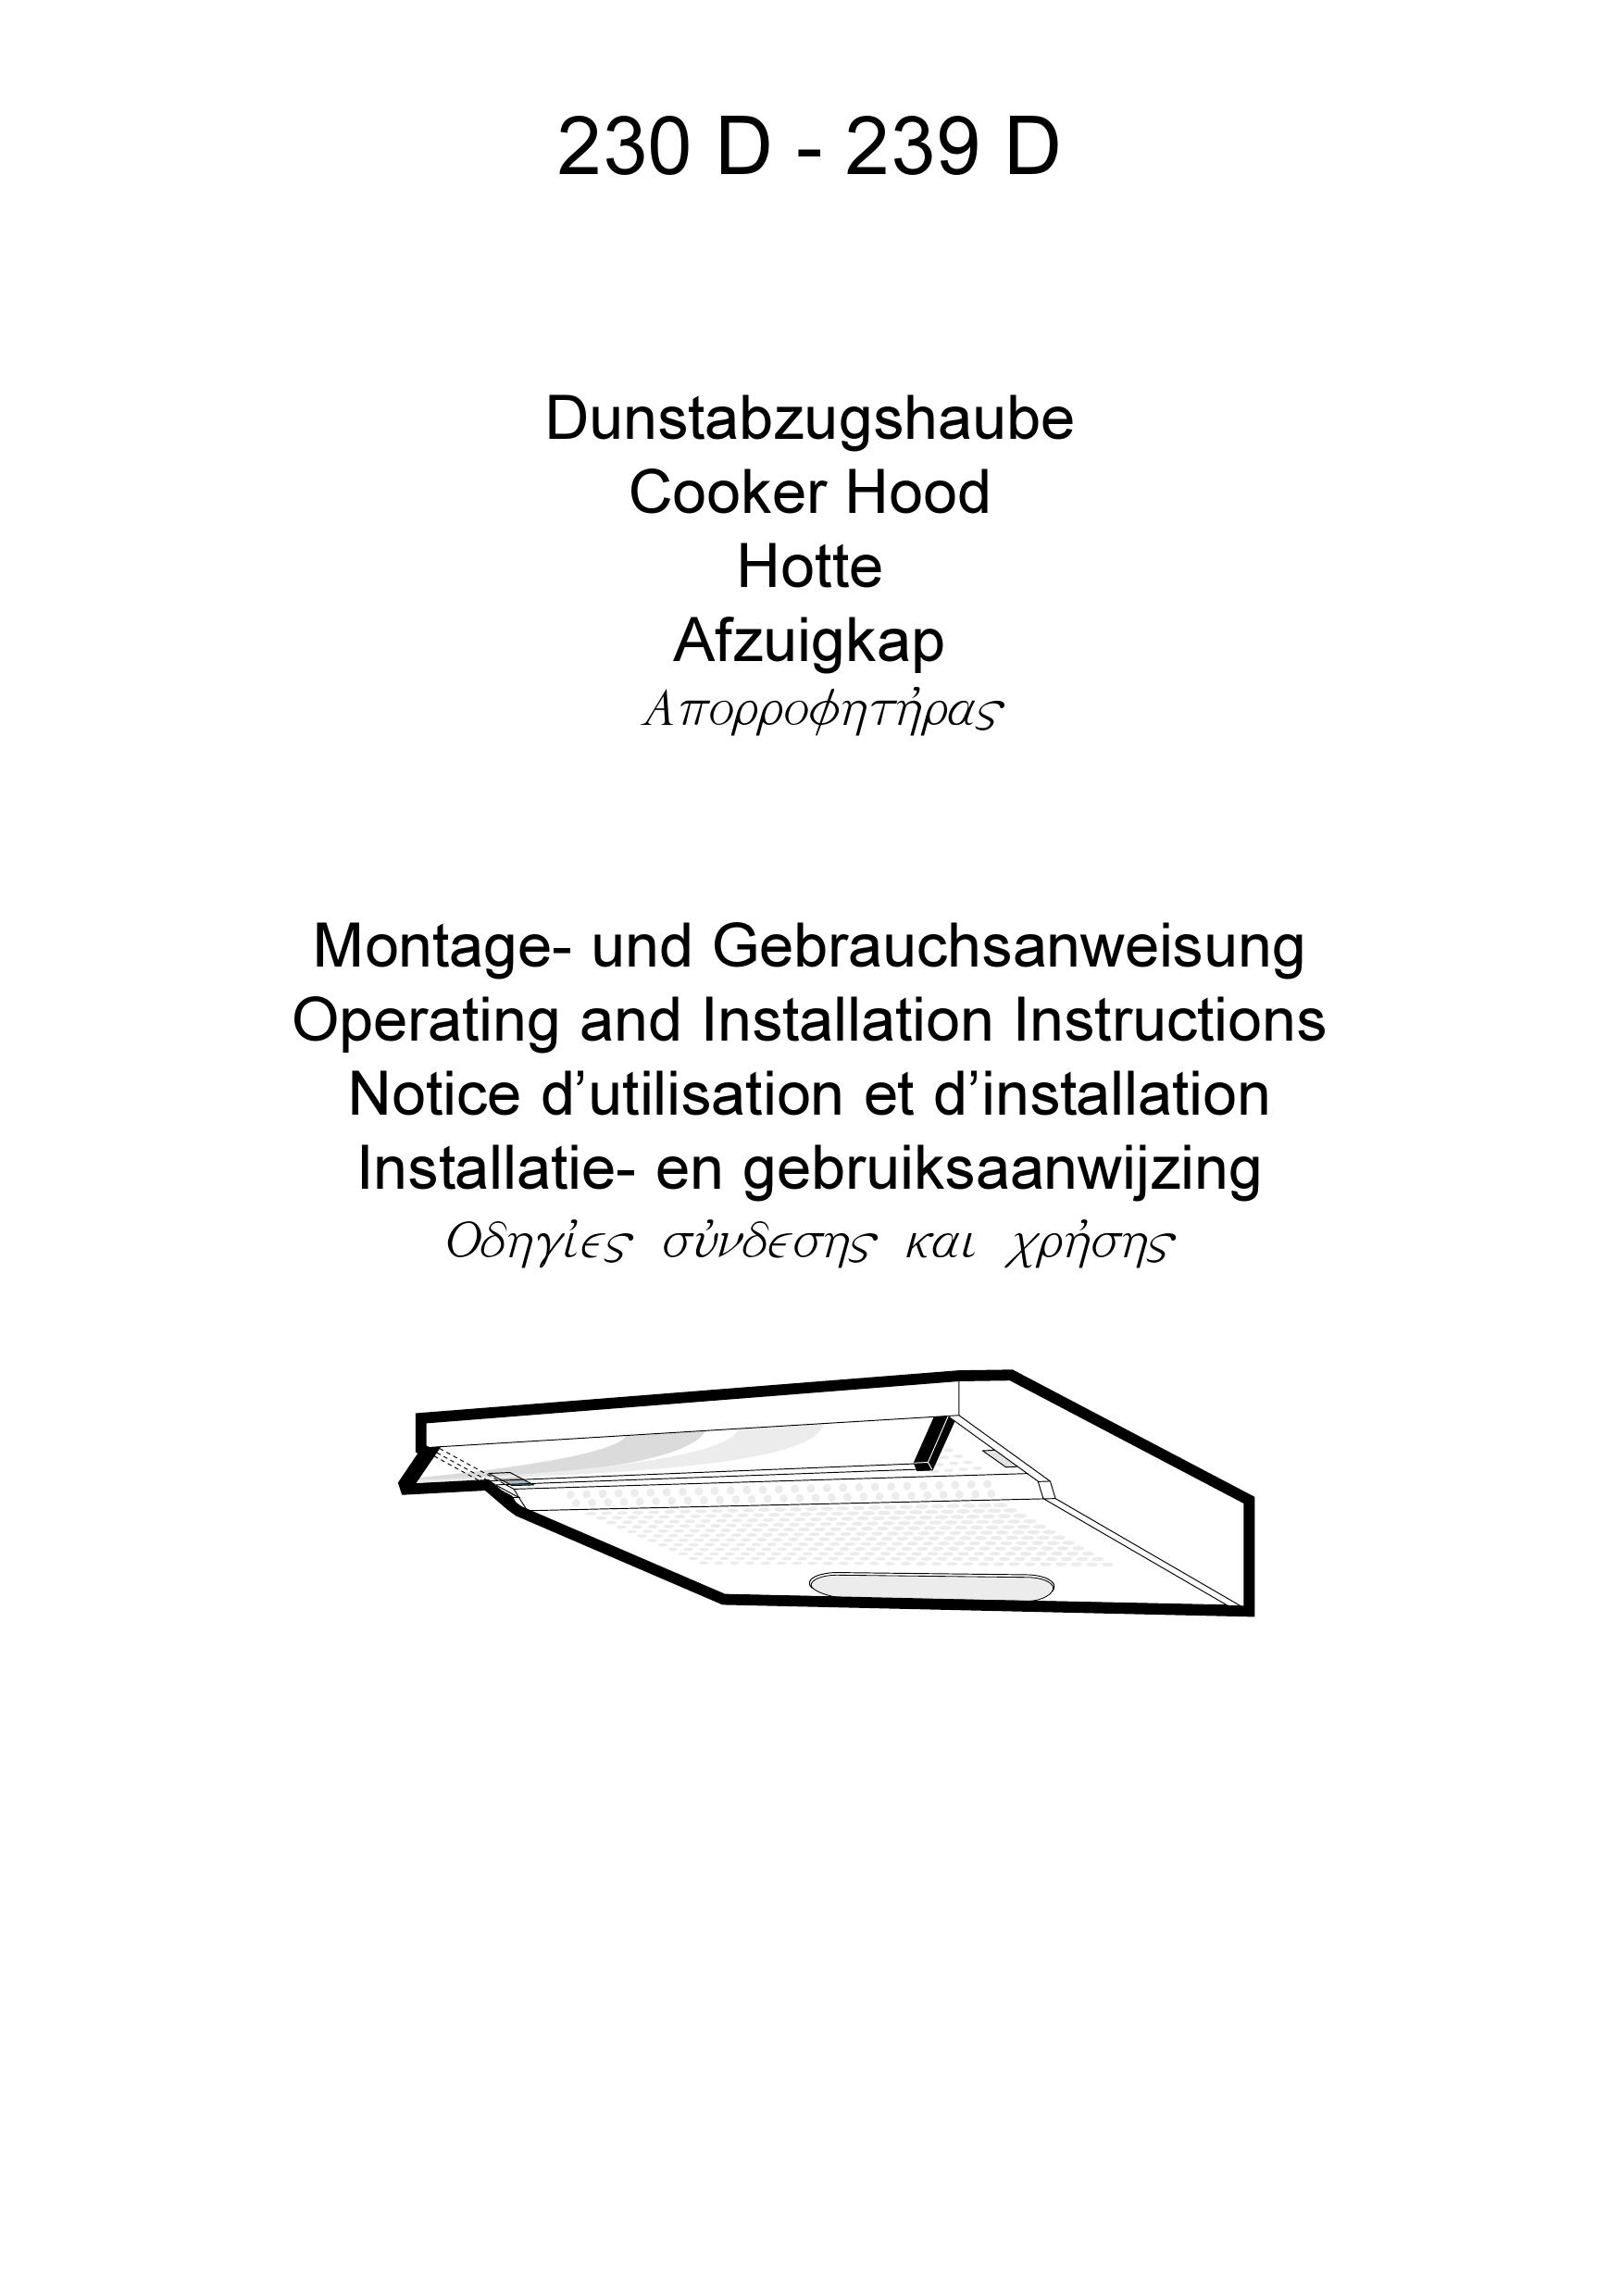 AEG 239 D Ventilation Hood User Manual